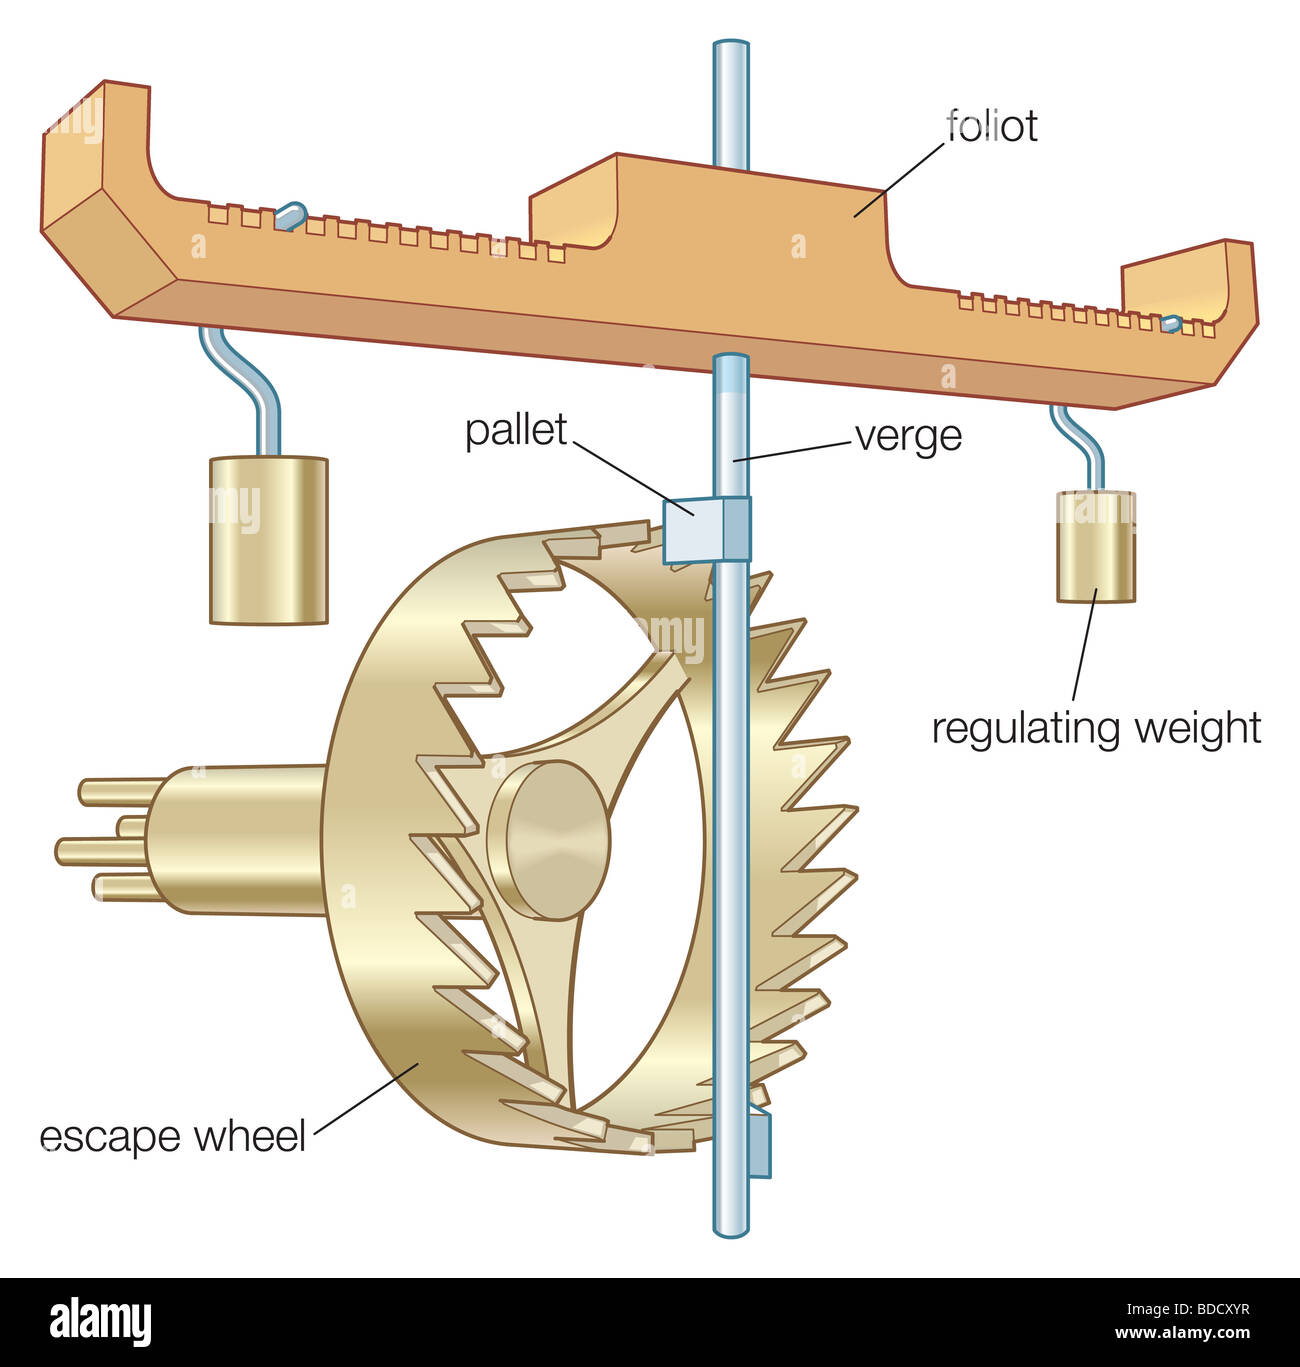 Verge-and-foliot mechanism Stock Photo